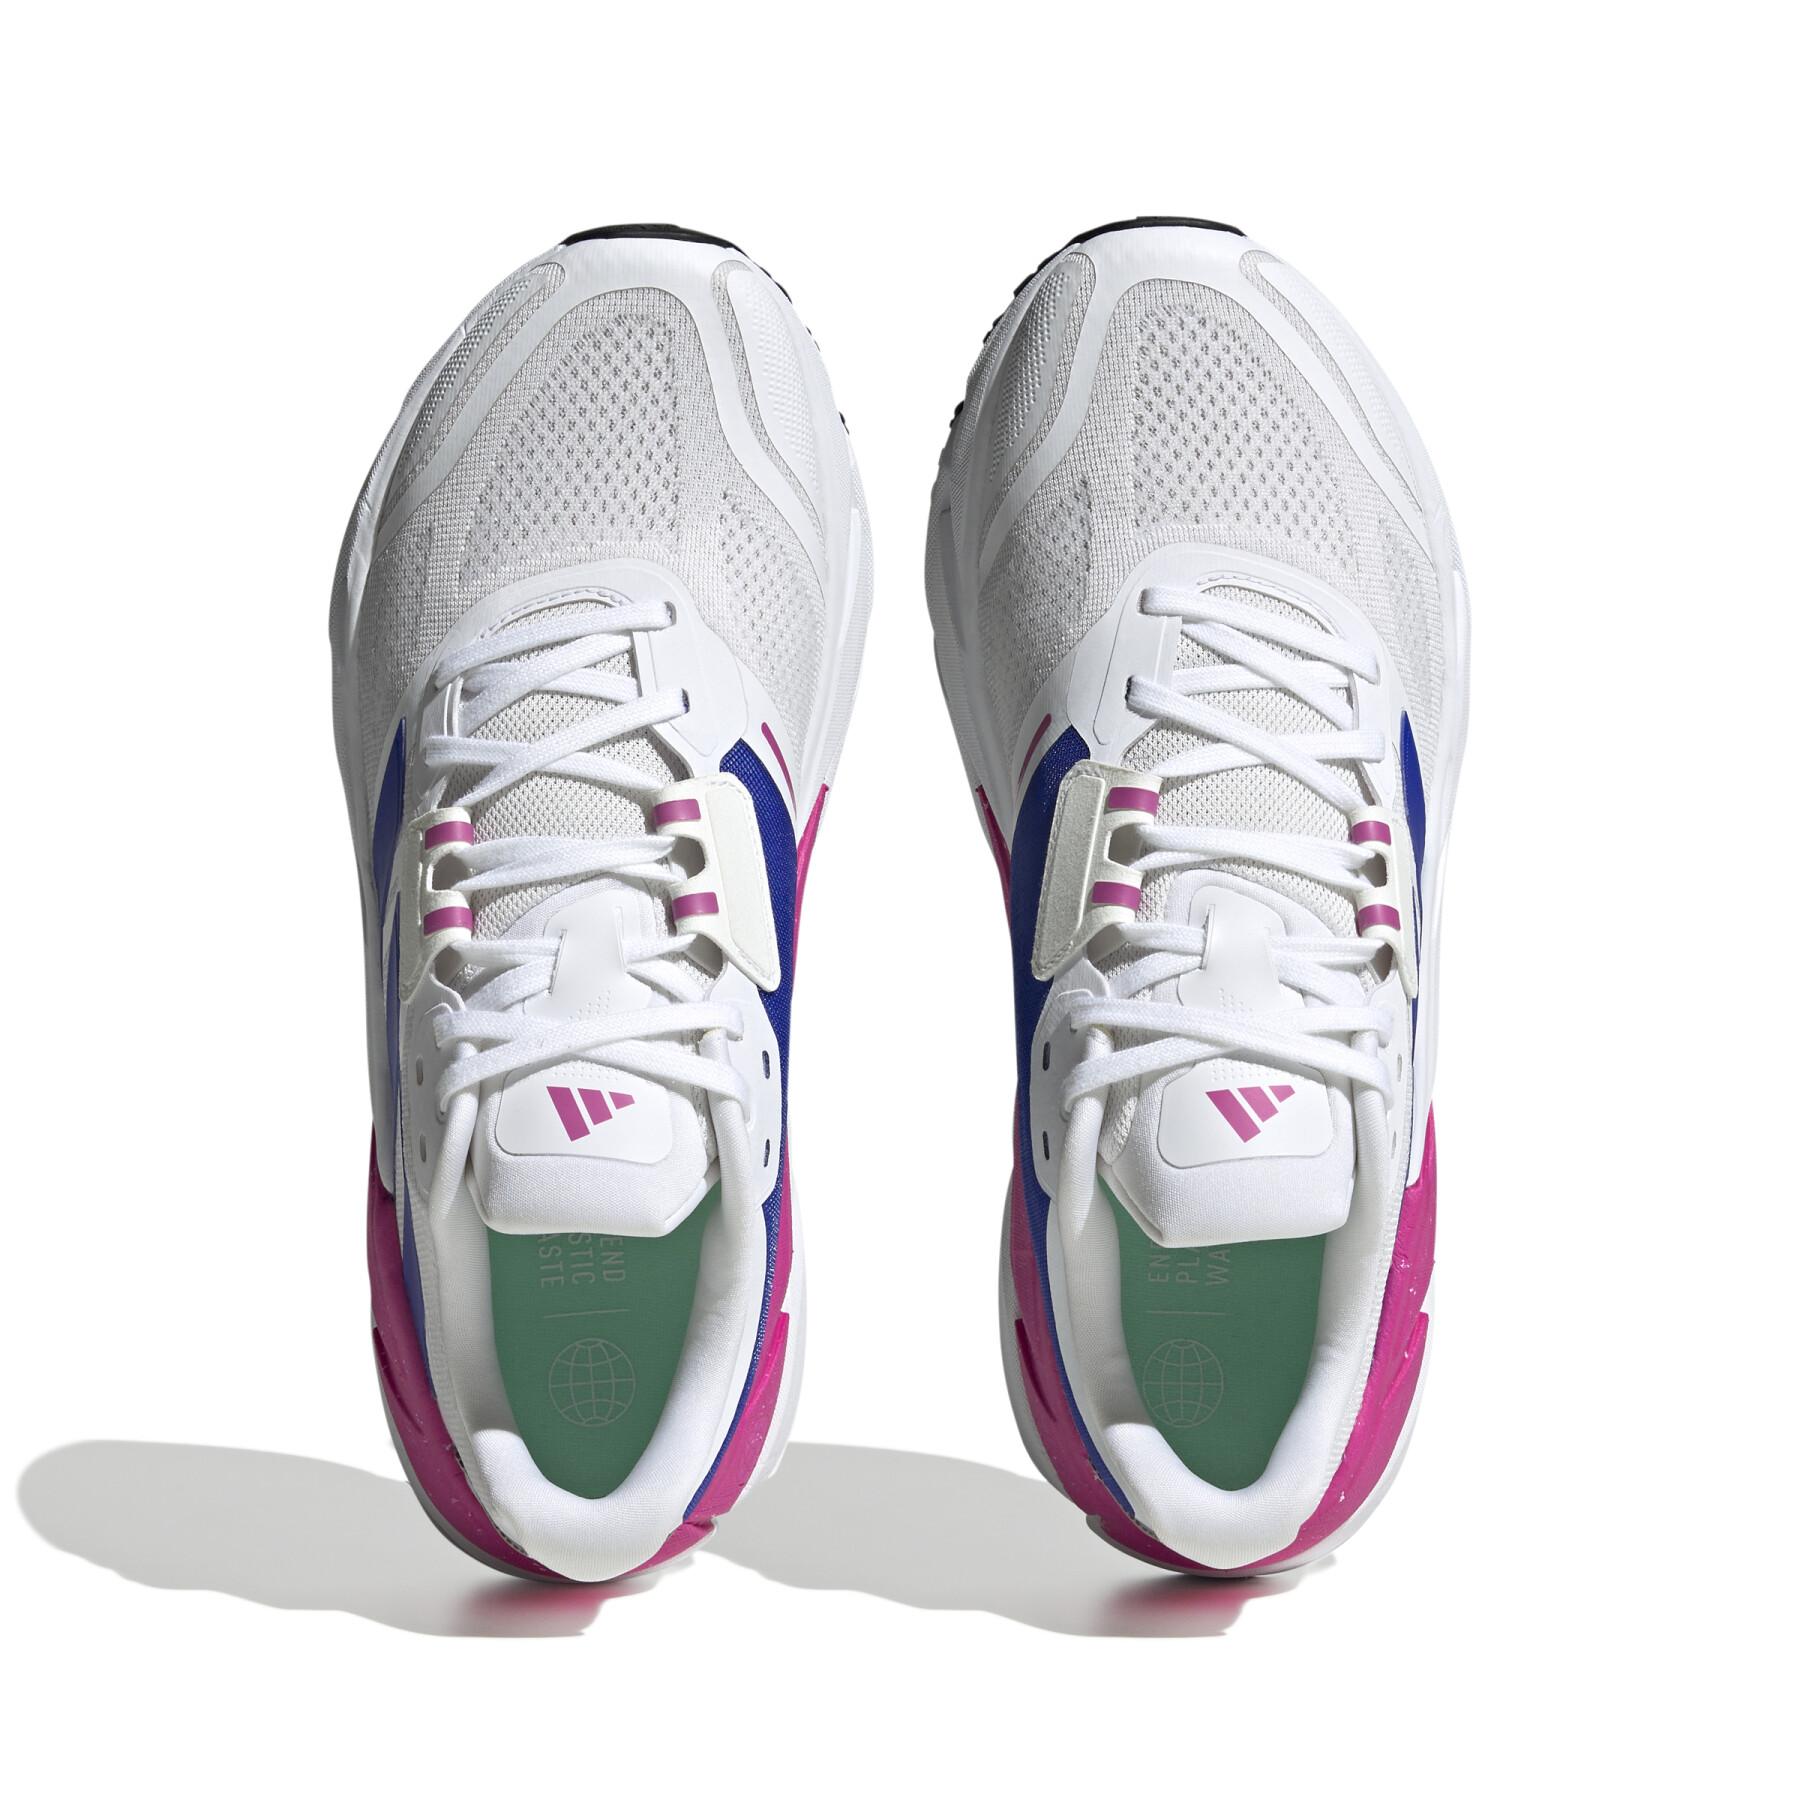 Chaussures de running adidas Adistar CS